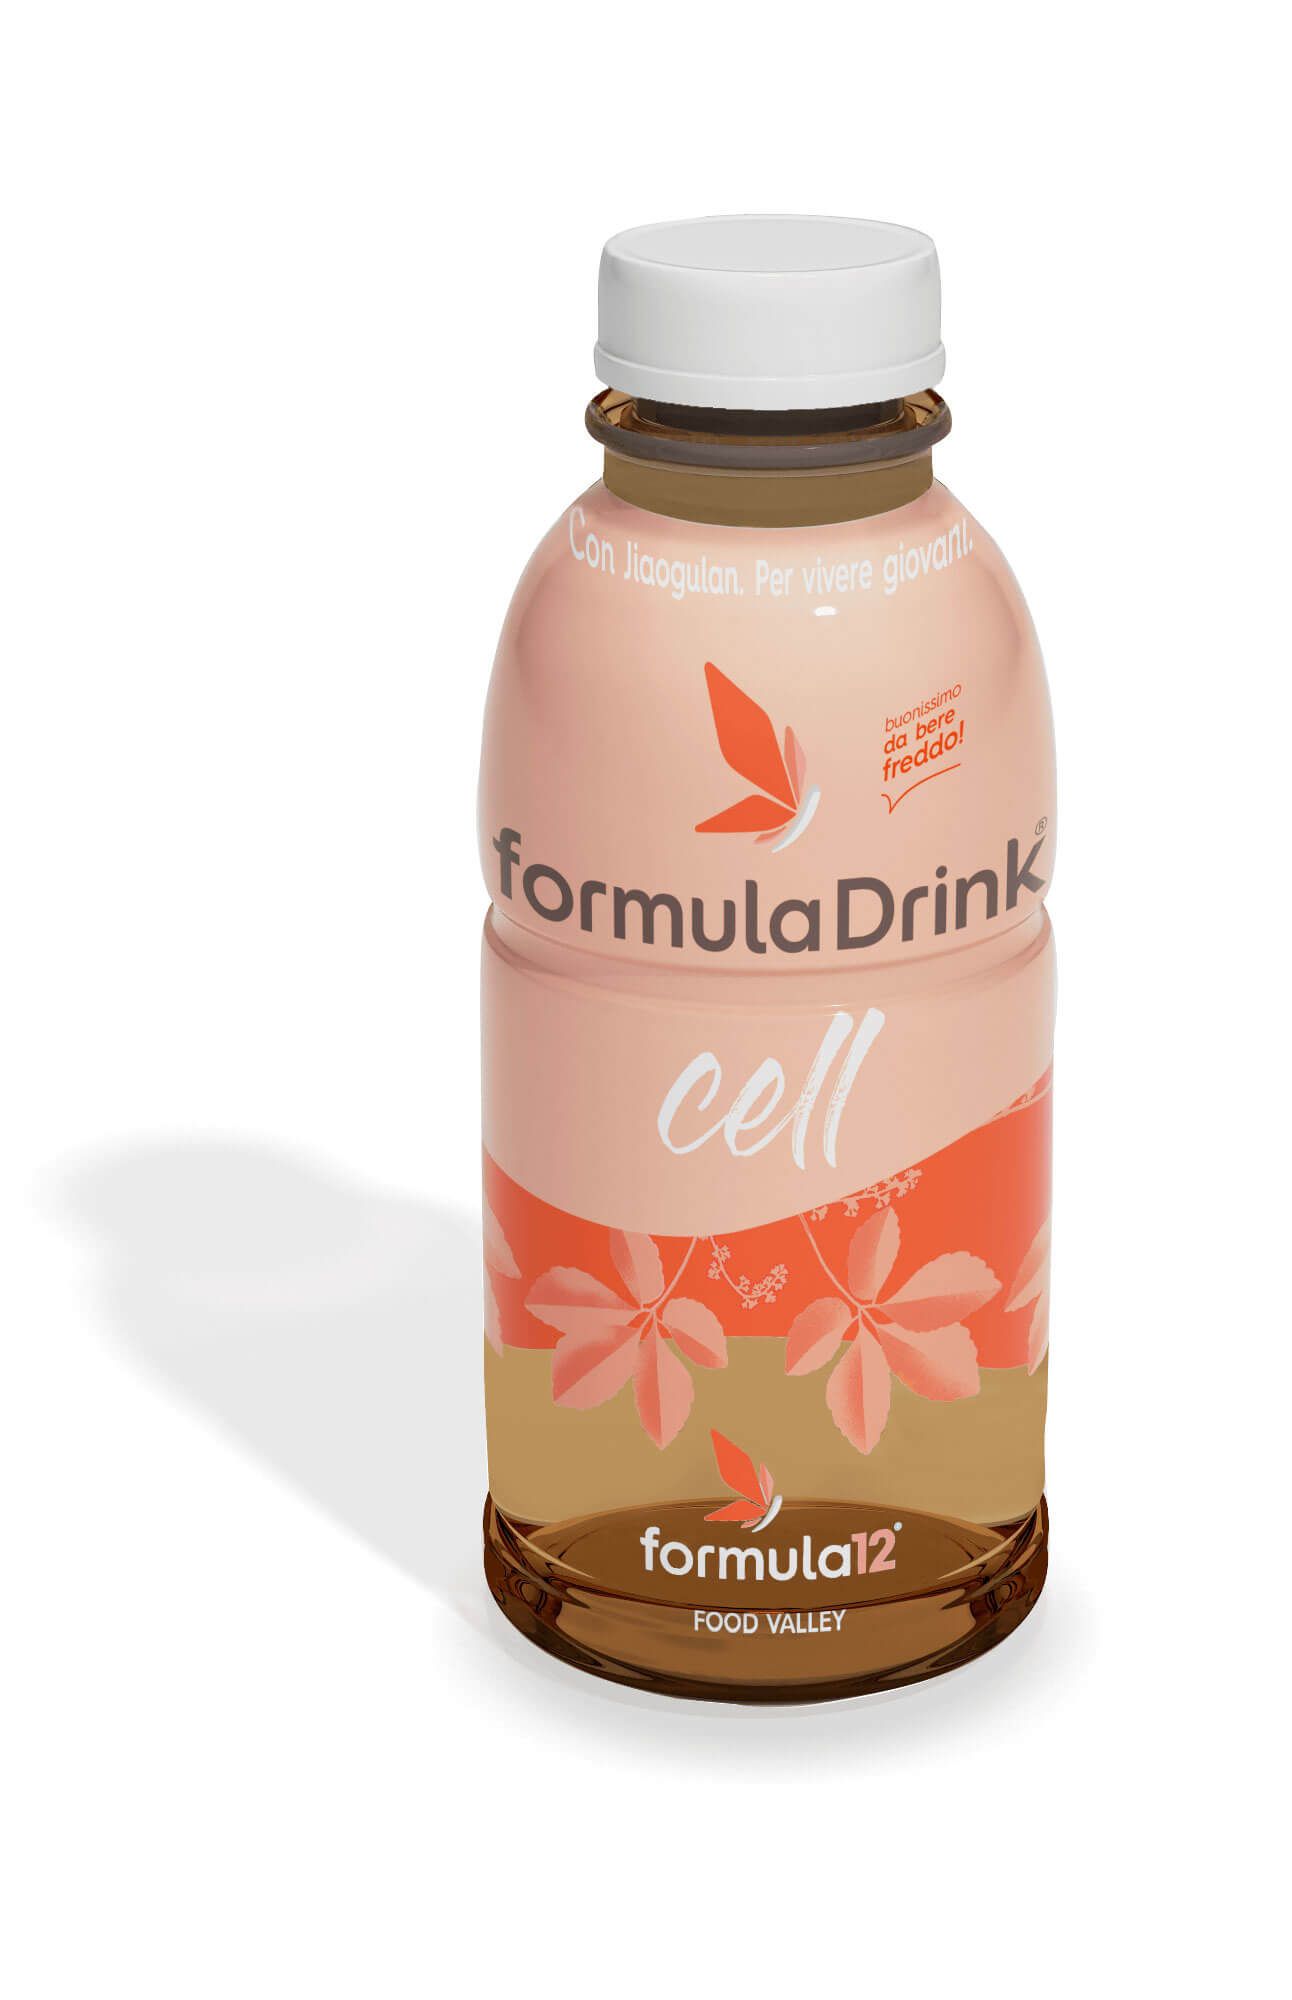 Formula Drink Cell